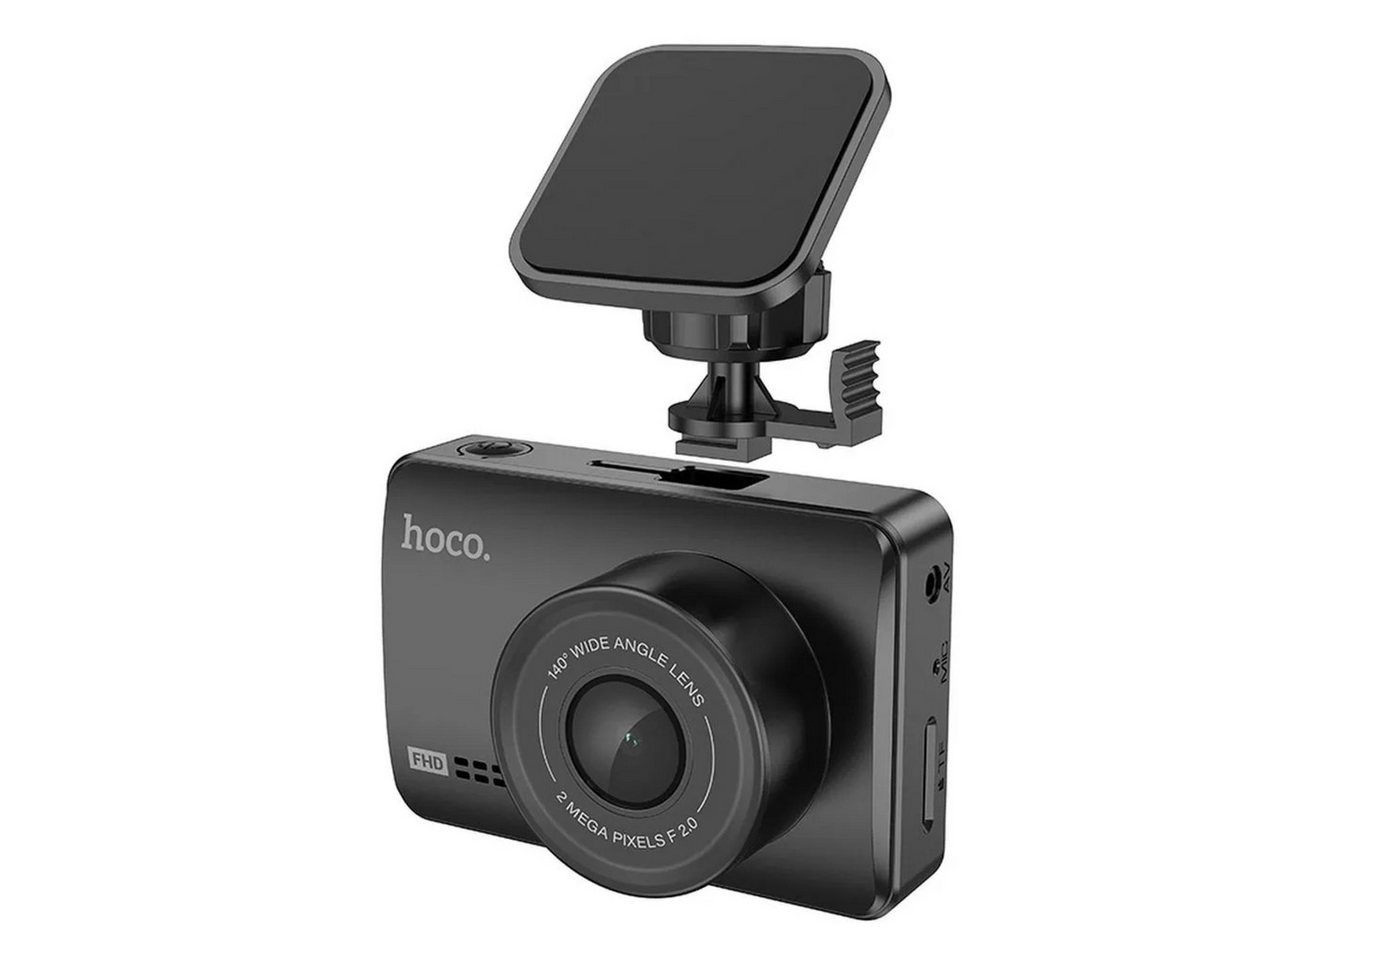 HOCO LCD Driving DV2 Autokamera, schwarz 2,45 Zoll 200 mAh 1080P Dashcam von HOCO